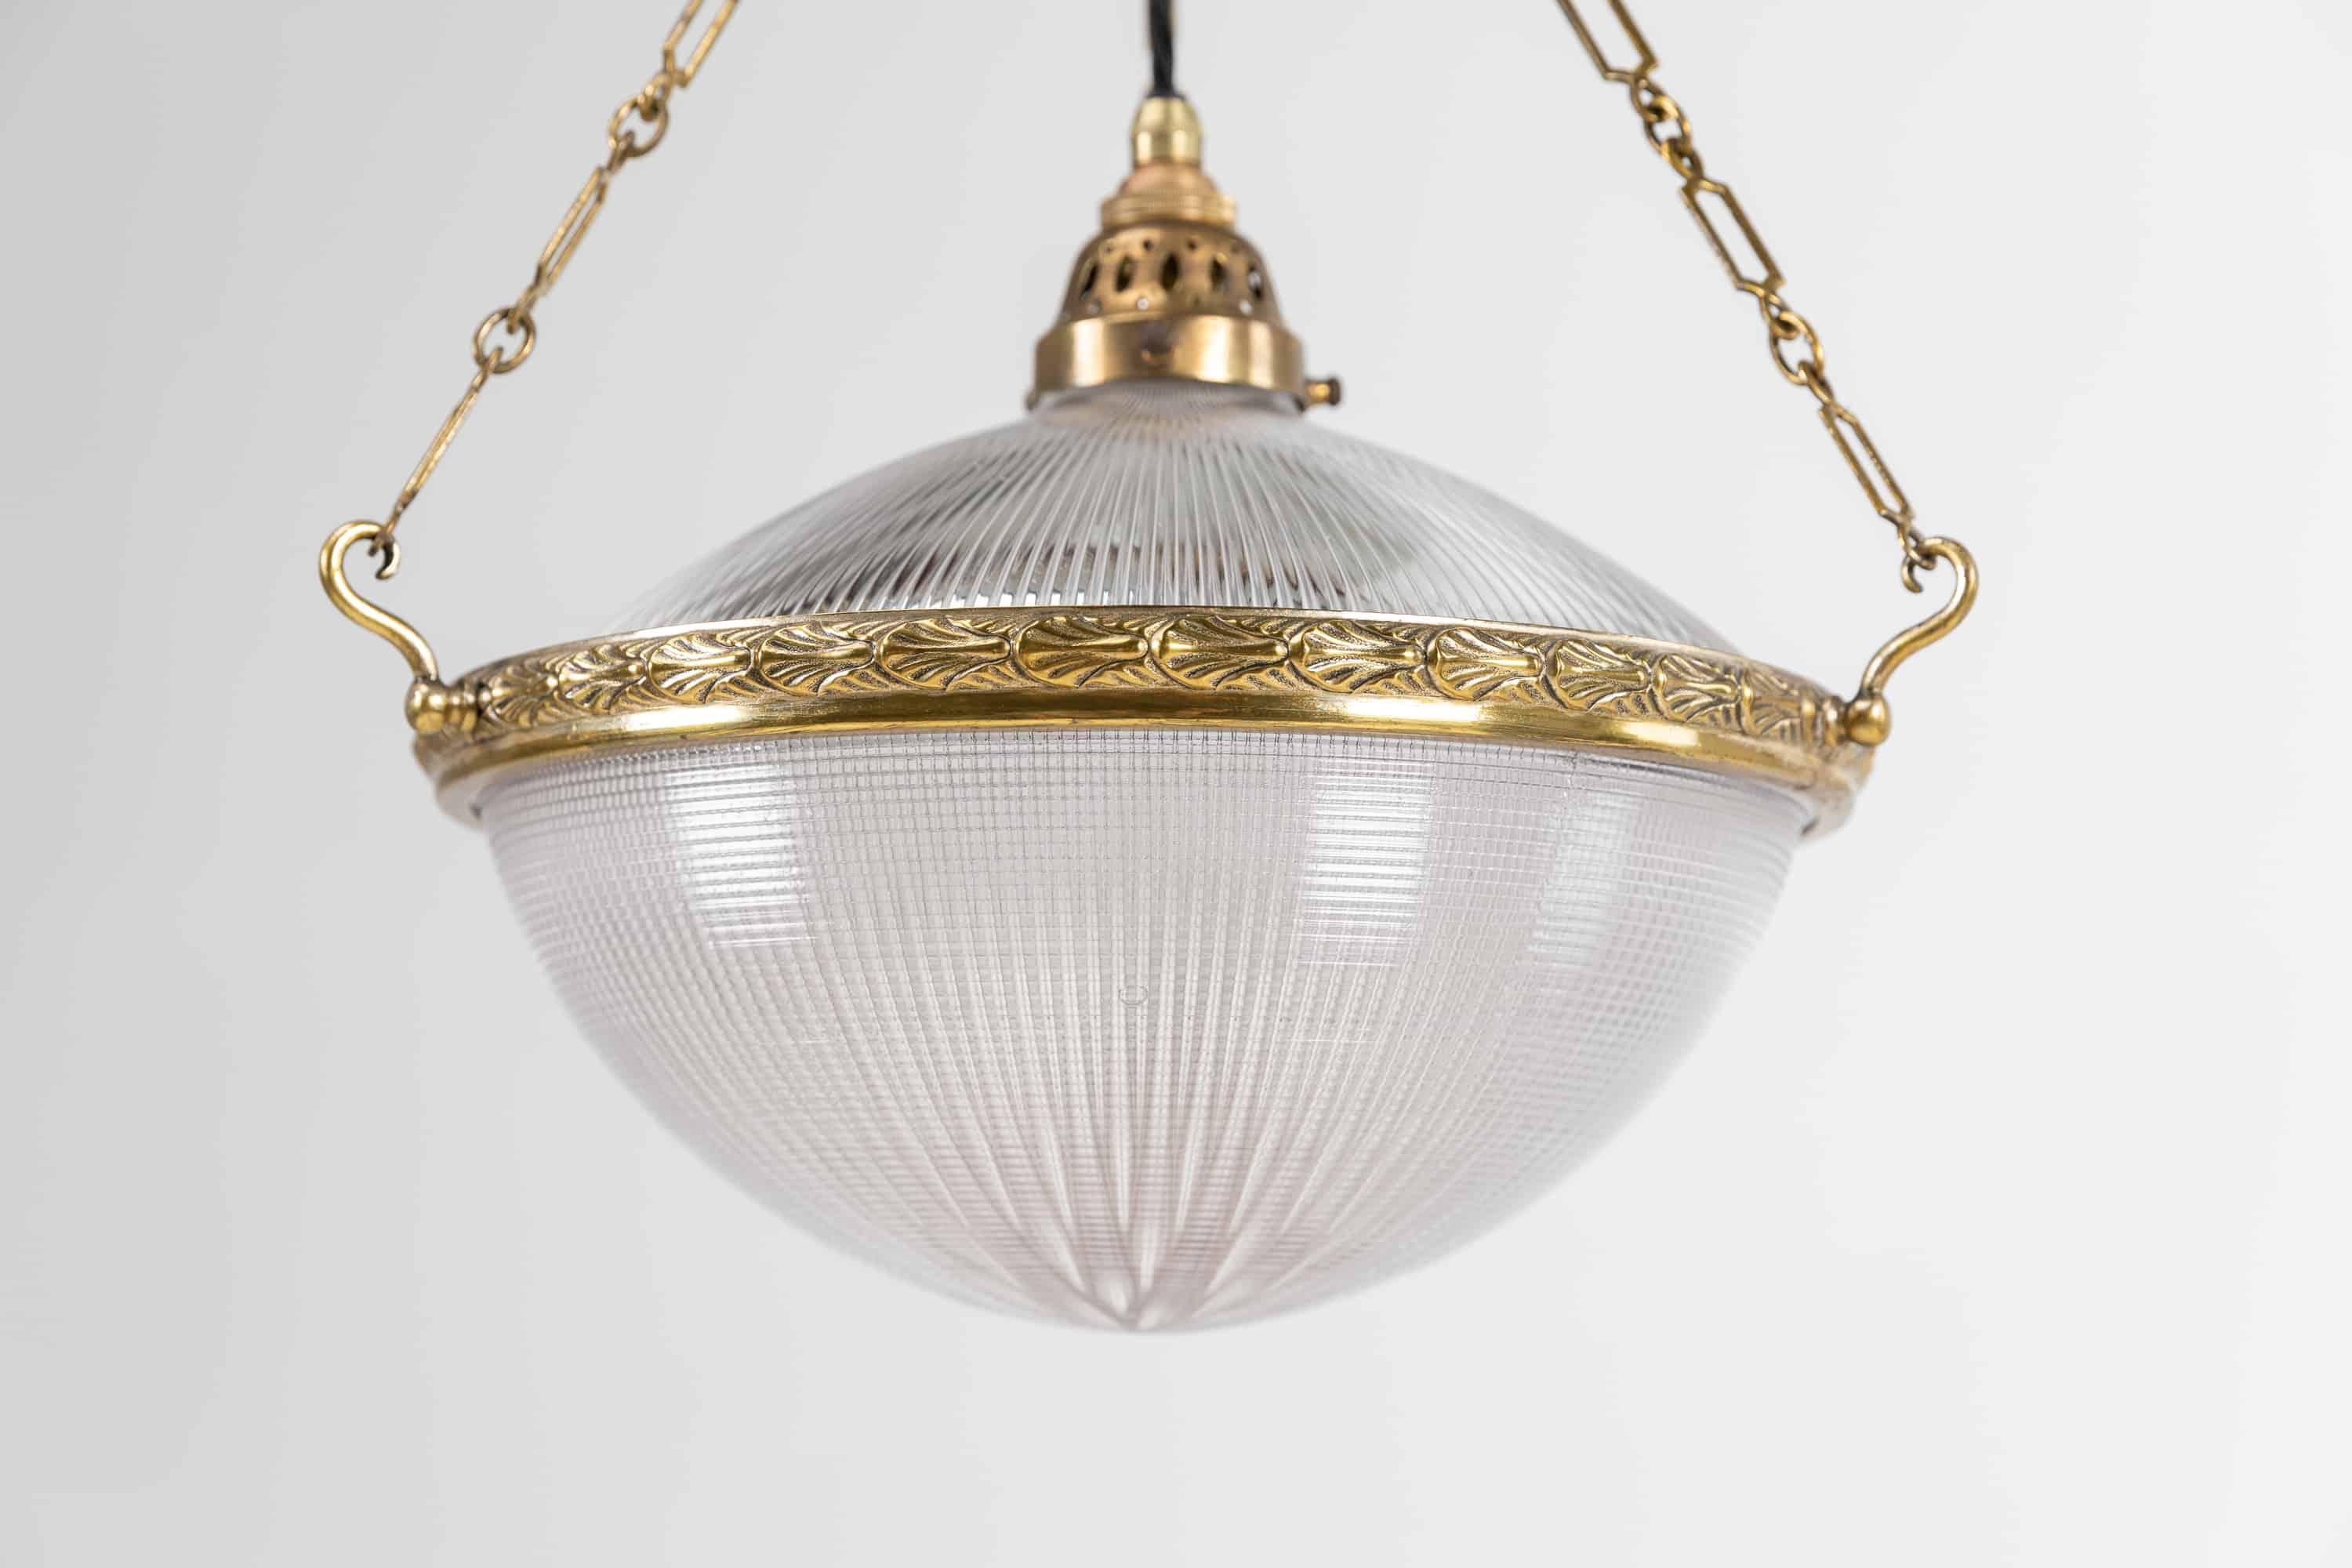 English Holophane 'Blondel Stiletto' Prismatic Glass Plafonnier Light Pendant, c.1910